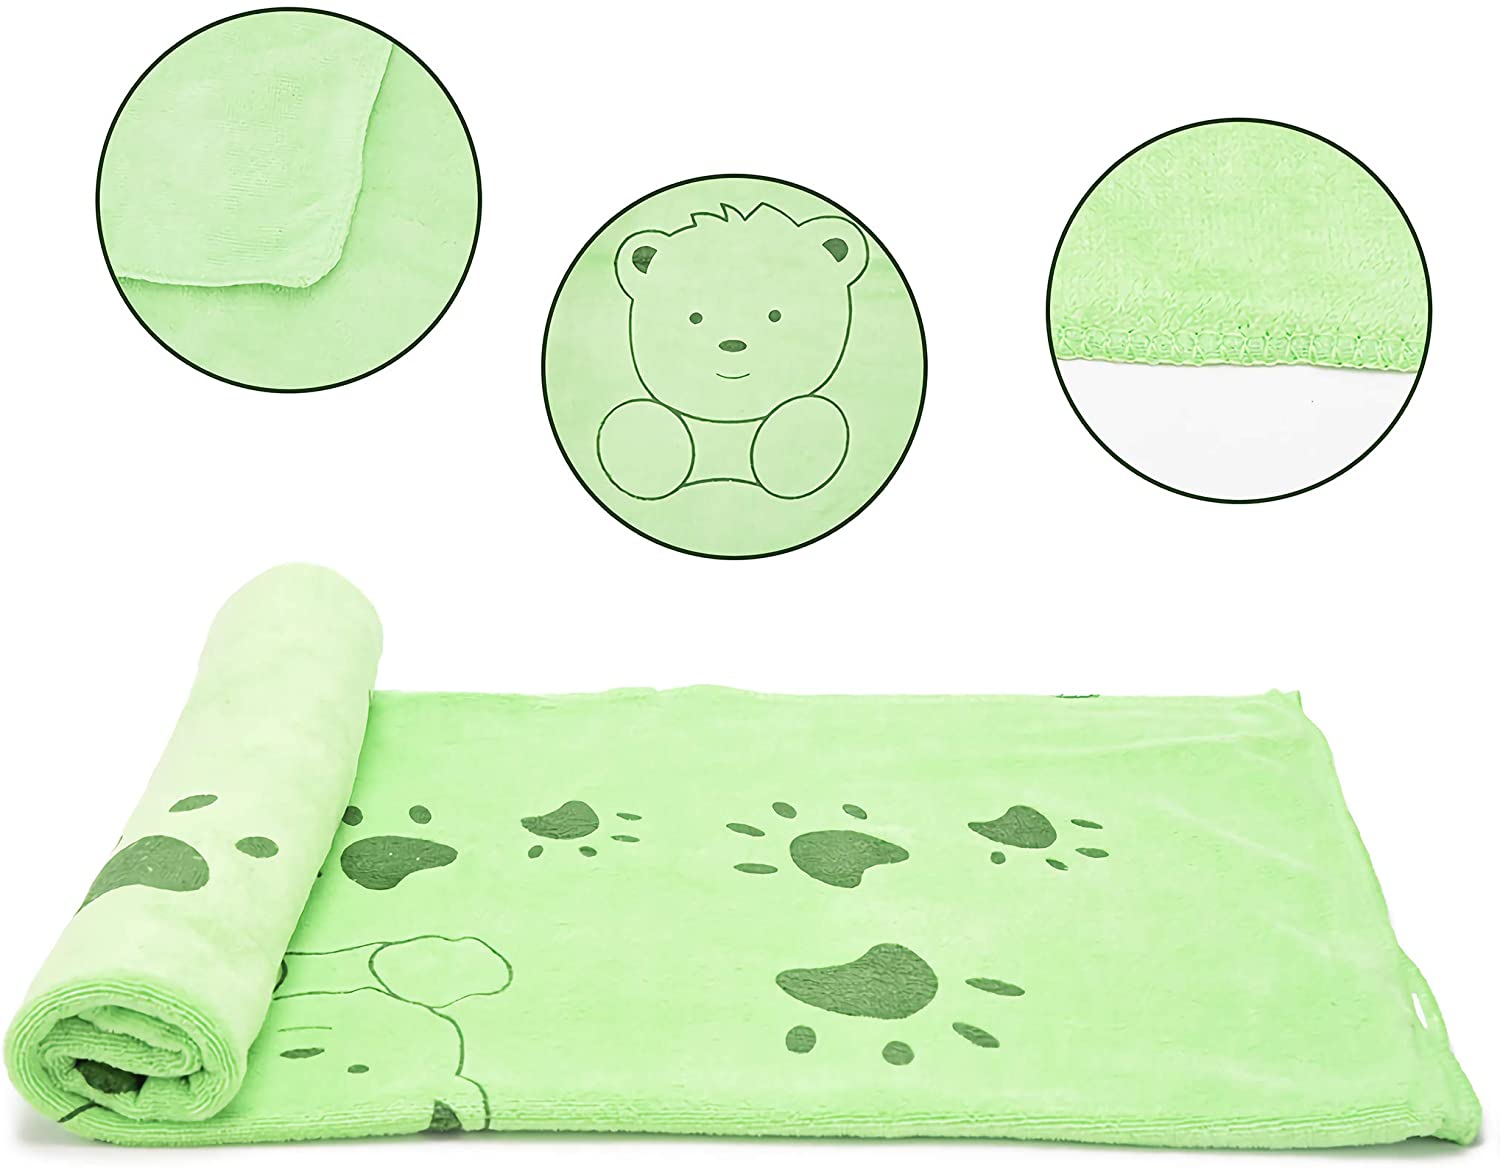 KUTKUT Dog Towel, Looluuloo Microfiber Drying Towels for Dog, Dog Bath Towel, Beach Towel, Absorbent Towel Suitable for Small and Medium Dogs (Green: 140 x 70cm)… - kutkutstyle